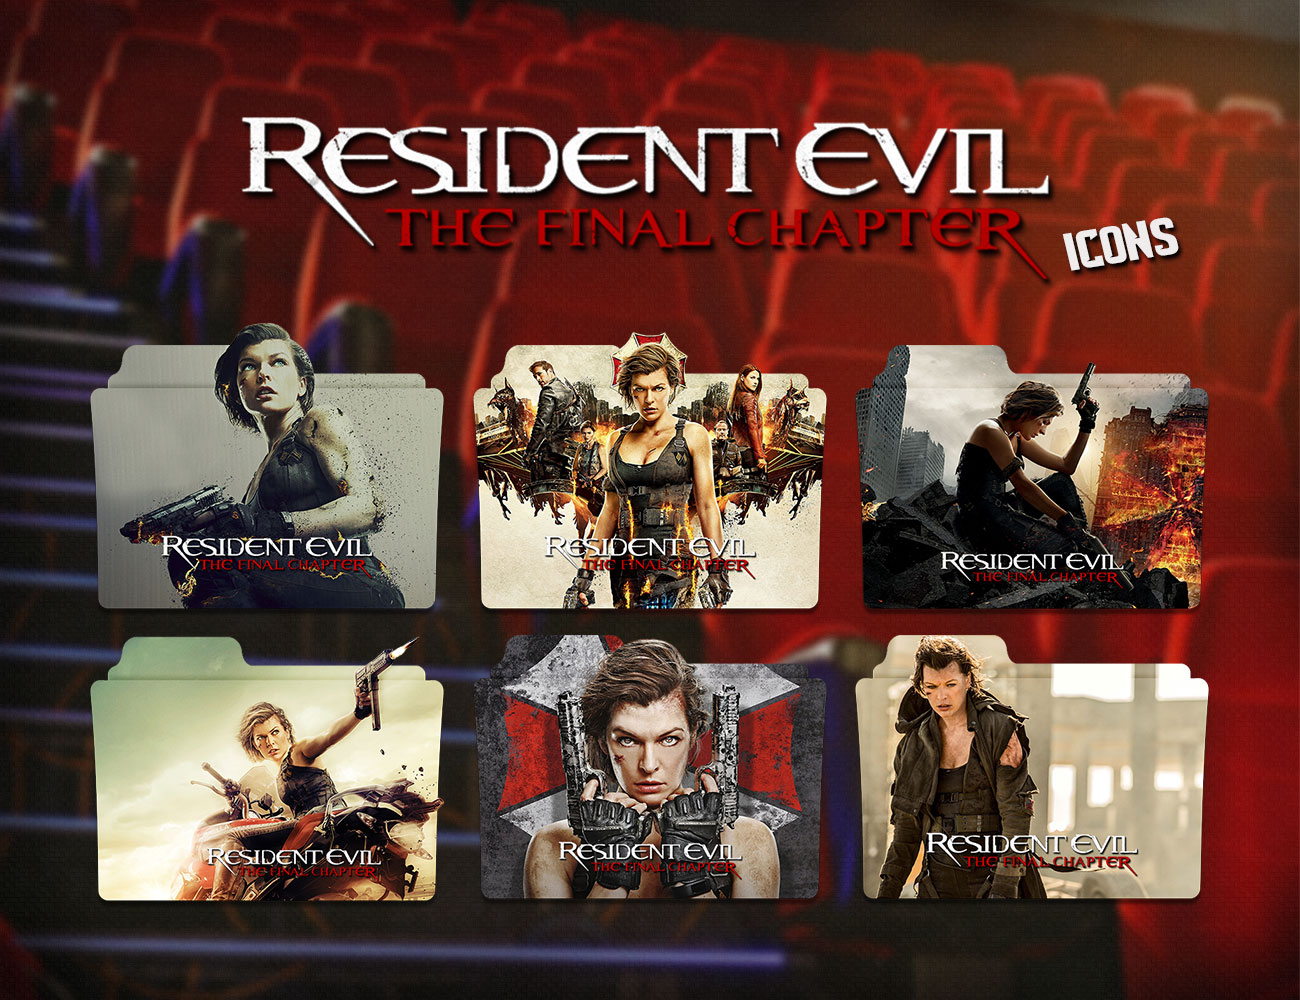 Resident Evil Final Chapter v7b movie folder icon by zenoasis on DeviantArt